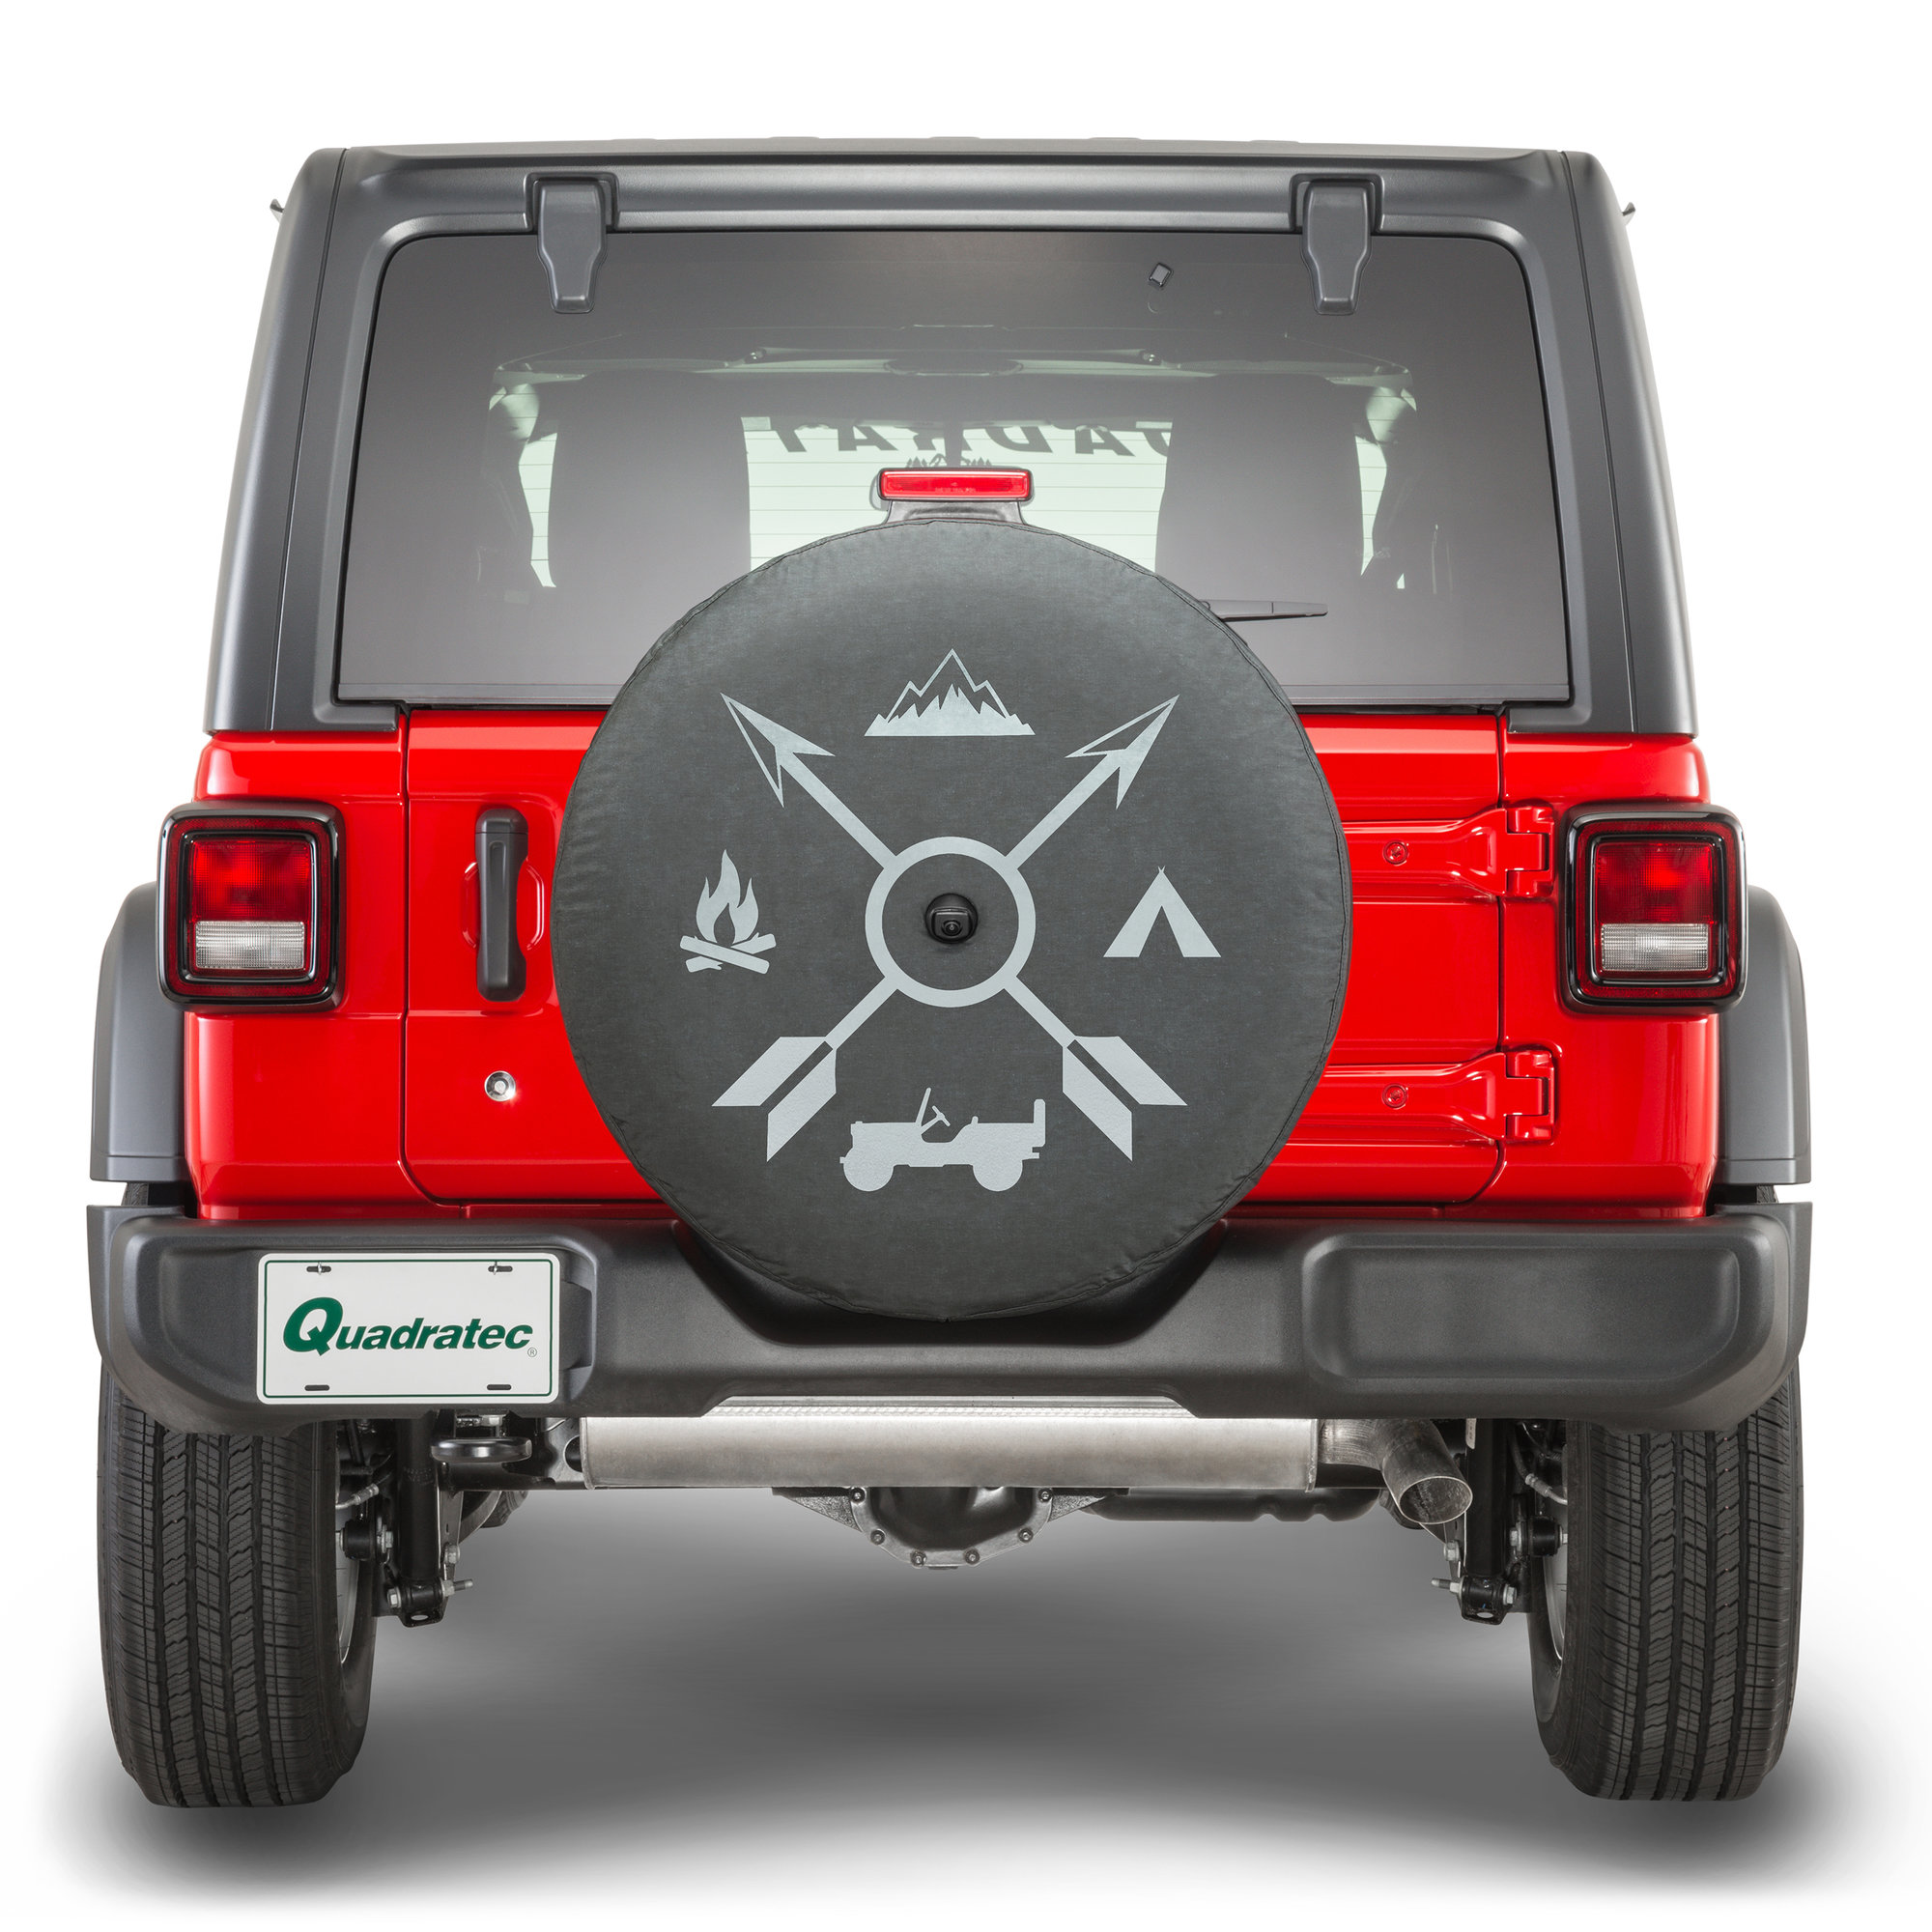 Fdgaxxh Spare Tire Cover Penn State Sun-Proof for Trailer Rv SUV Truck Camper Travel Trailer Accessories